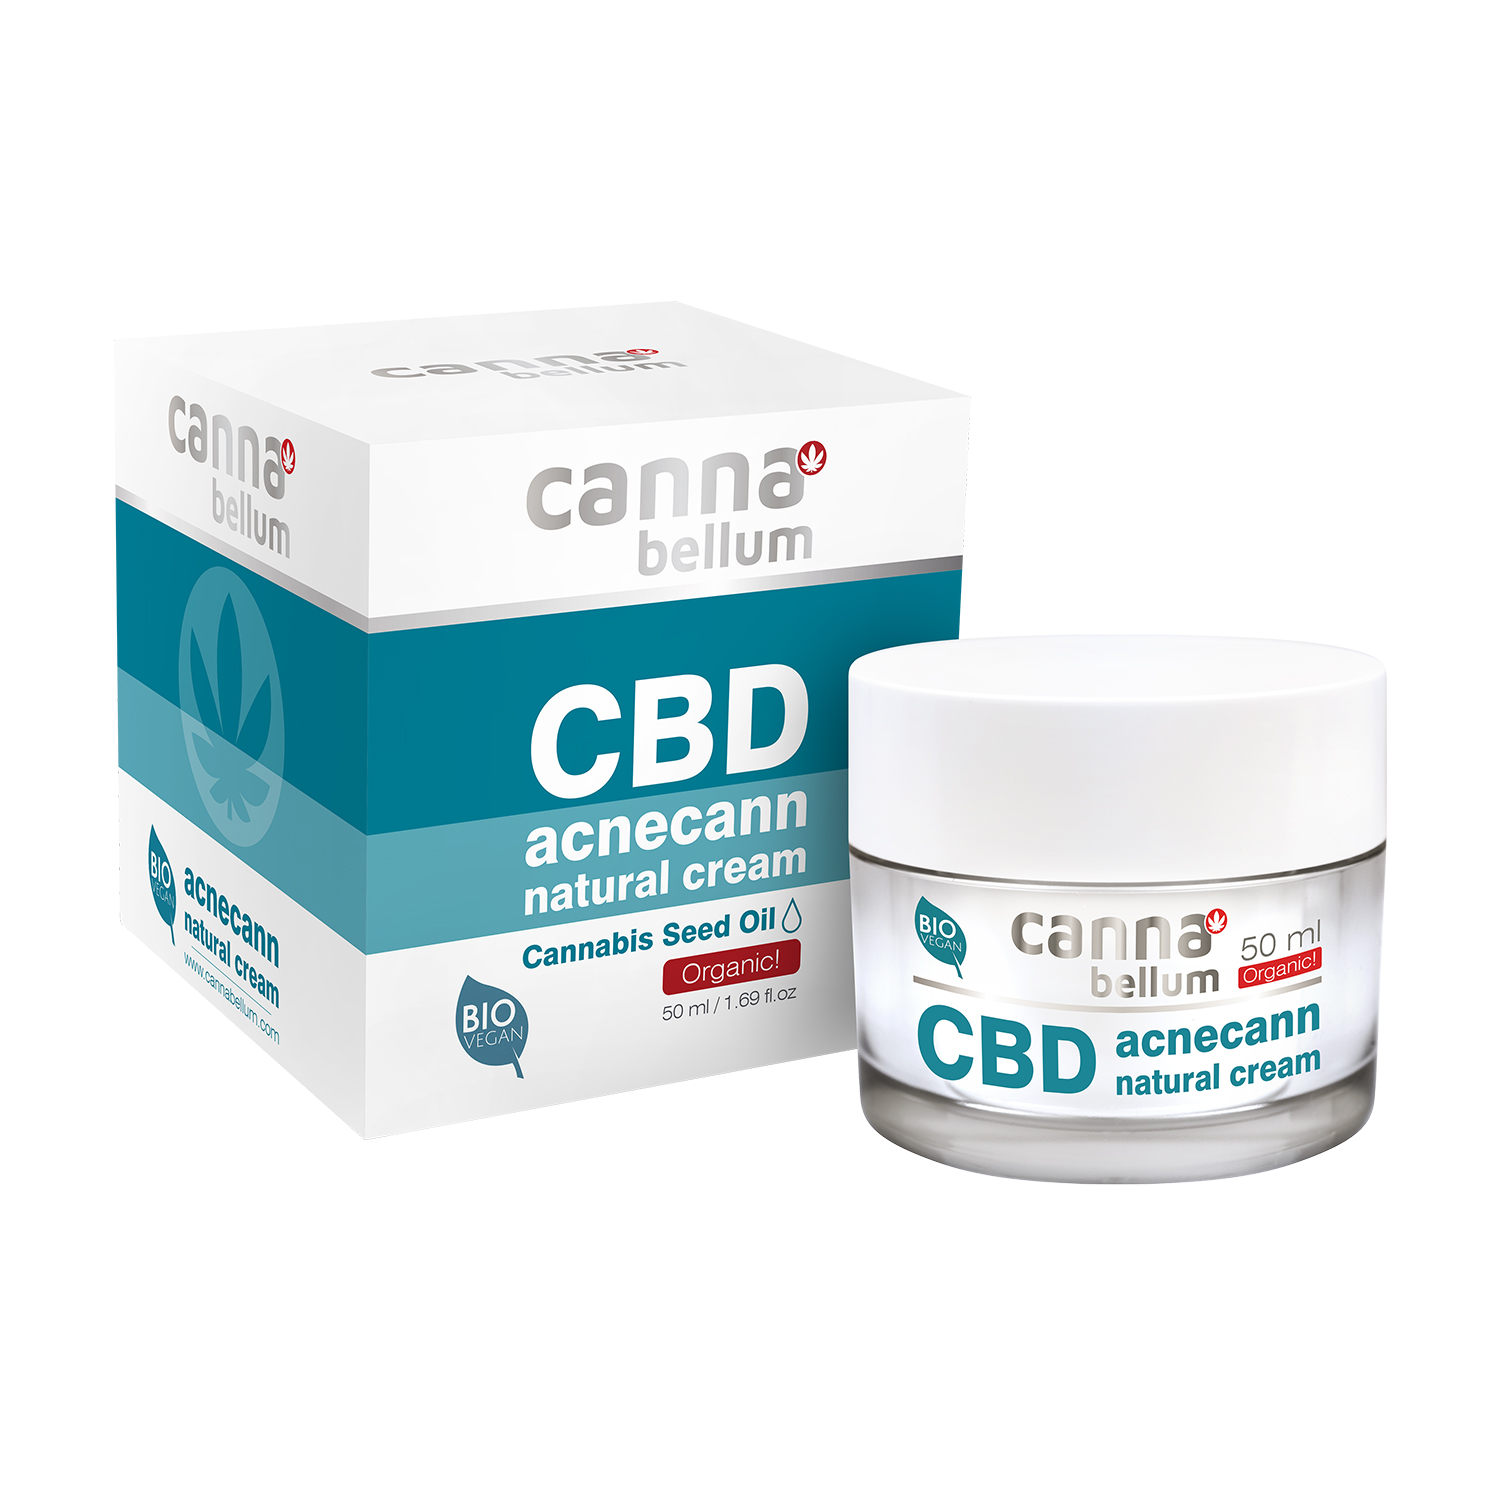 Cannabellum CBD acnecann natural cream 50ml P1244 komplet WEB 106